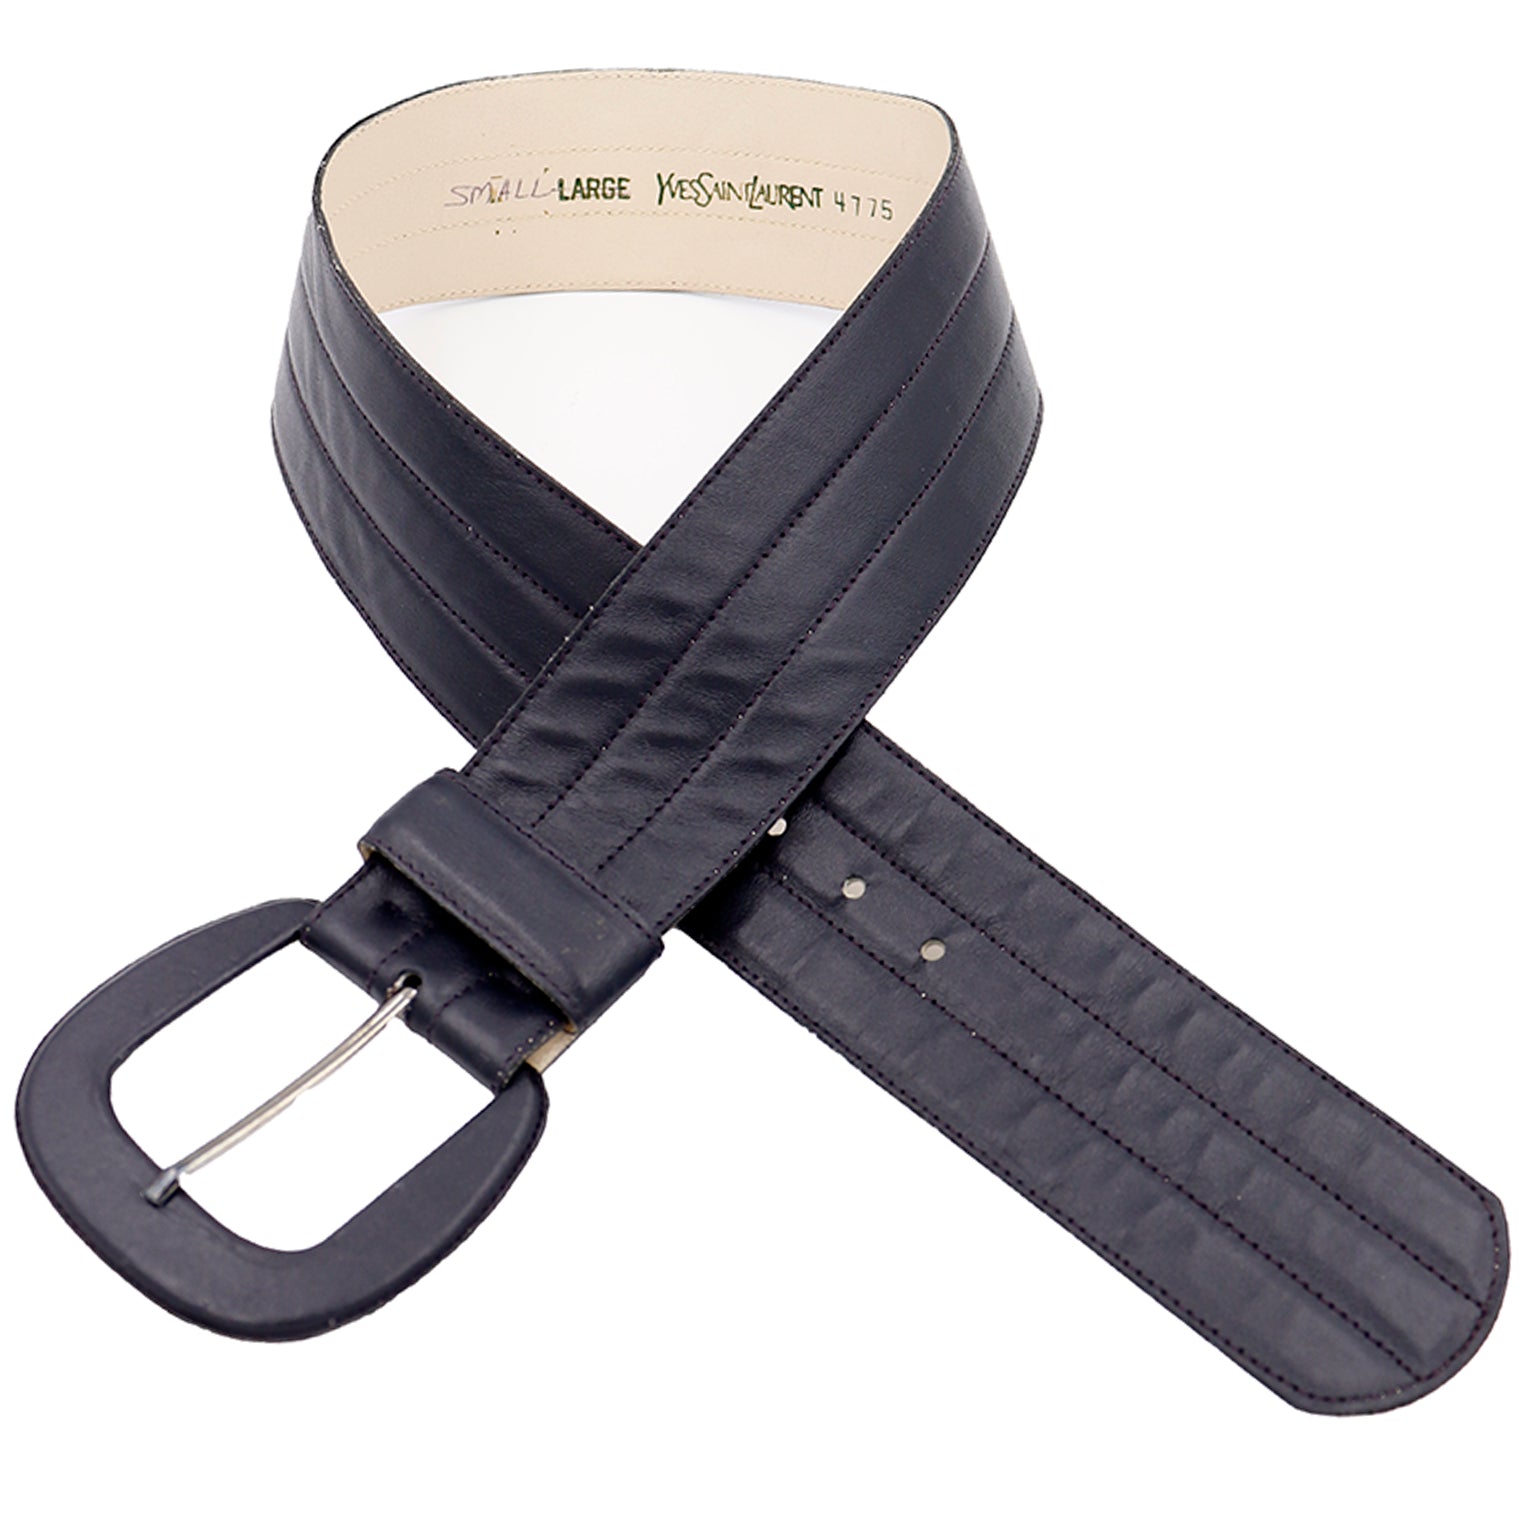 Saint Laurent YSL leather belt